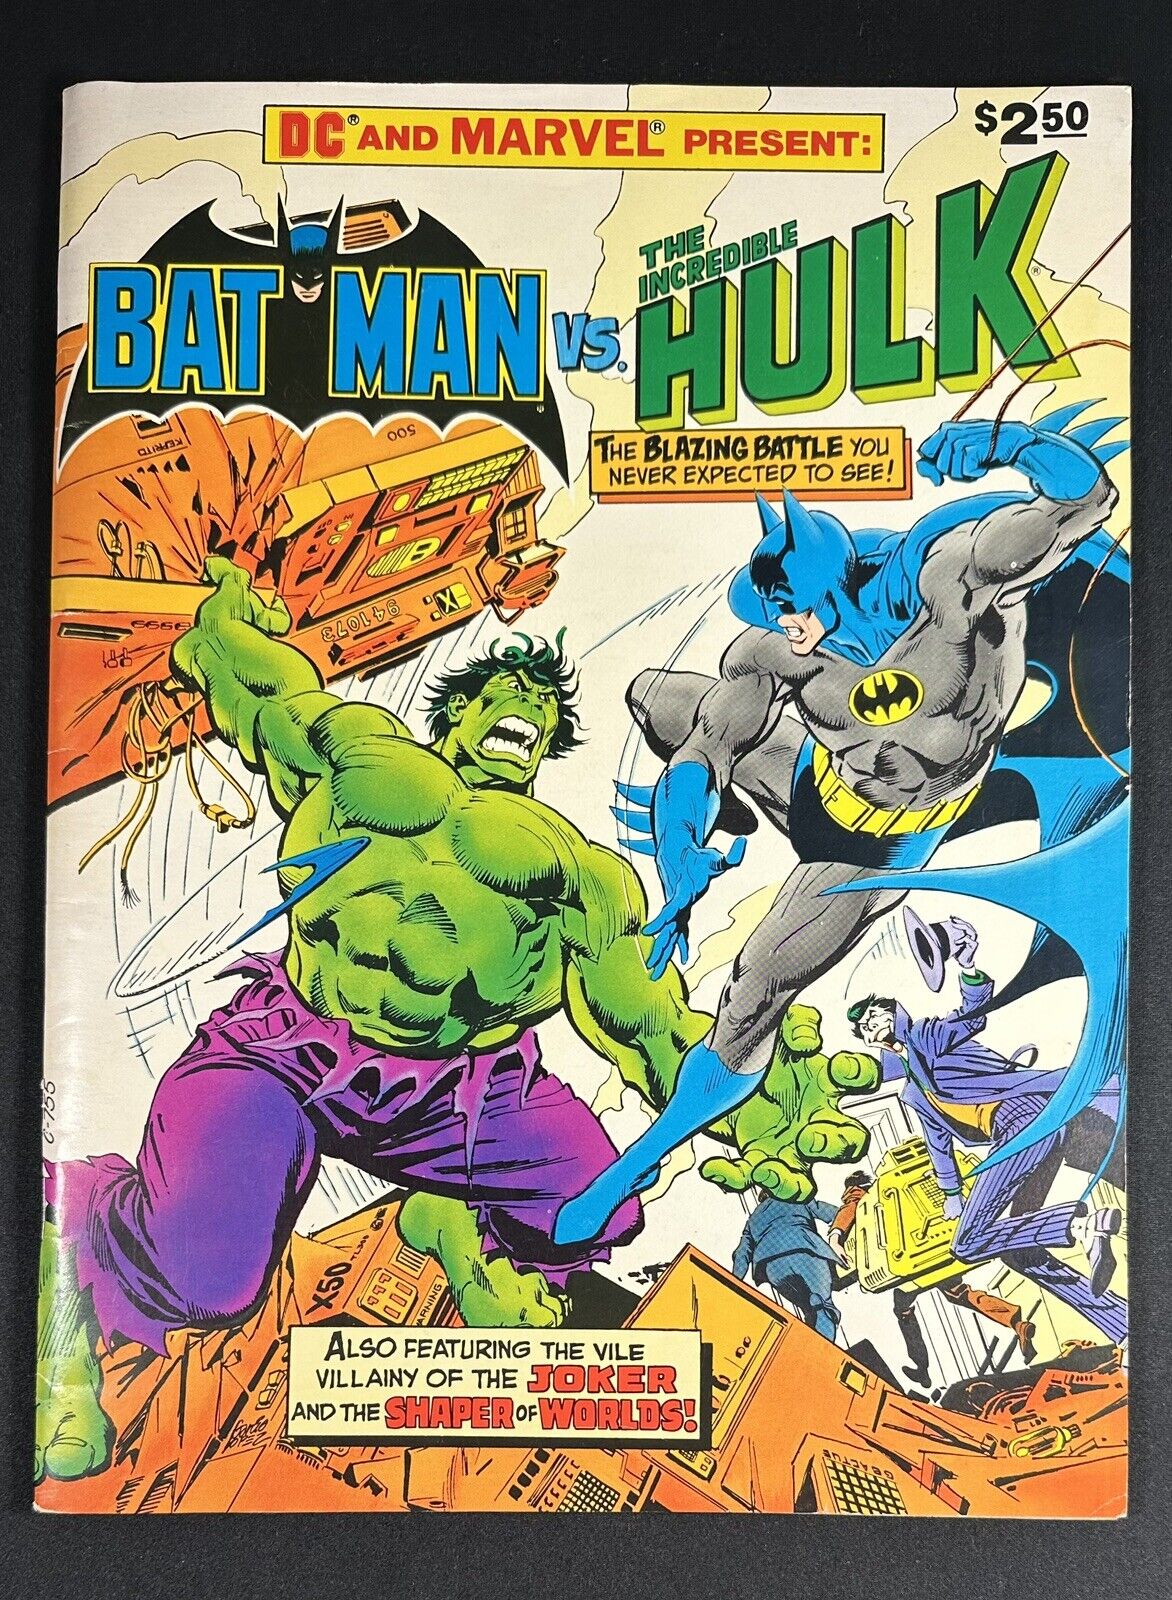 Batman vs. The Incredible Hulk #1 DC & Marvel Presents Treasury 1981